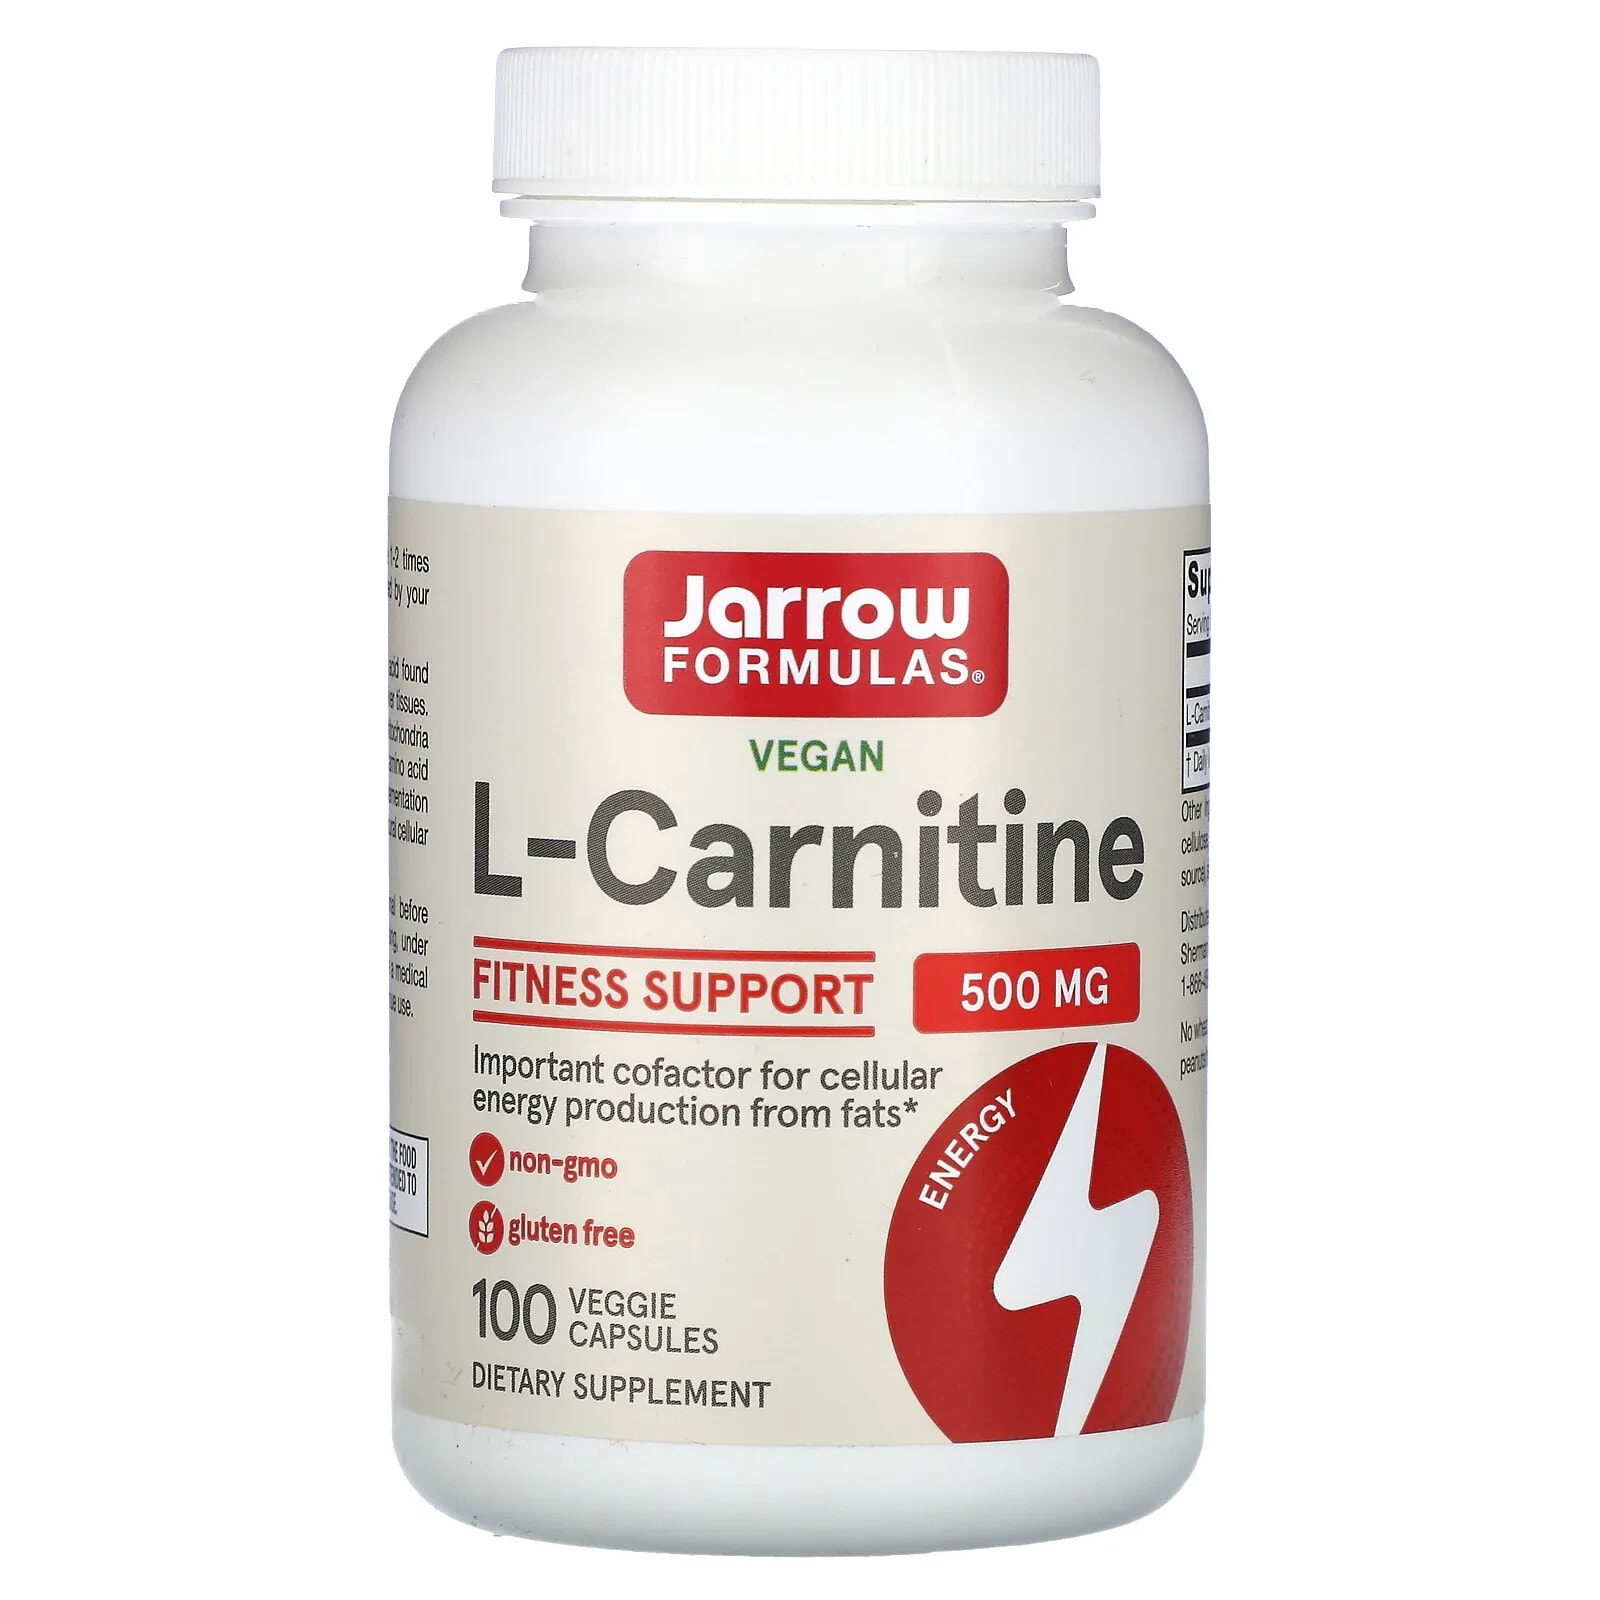 Jarrow Formulas, L-Carnitine 500, 500 mg, 50 Veggie Caps